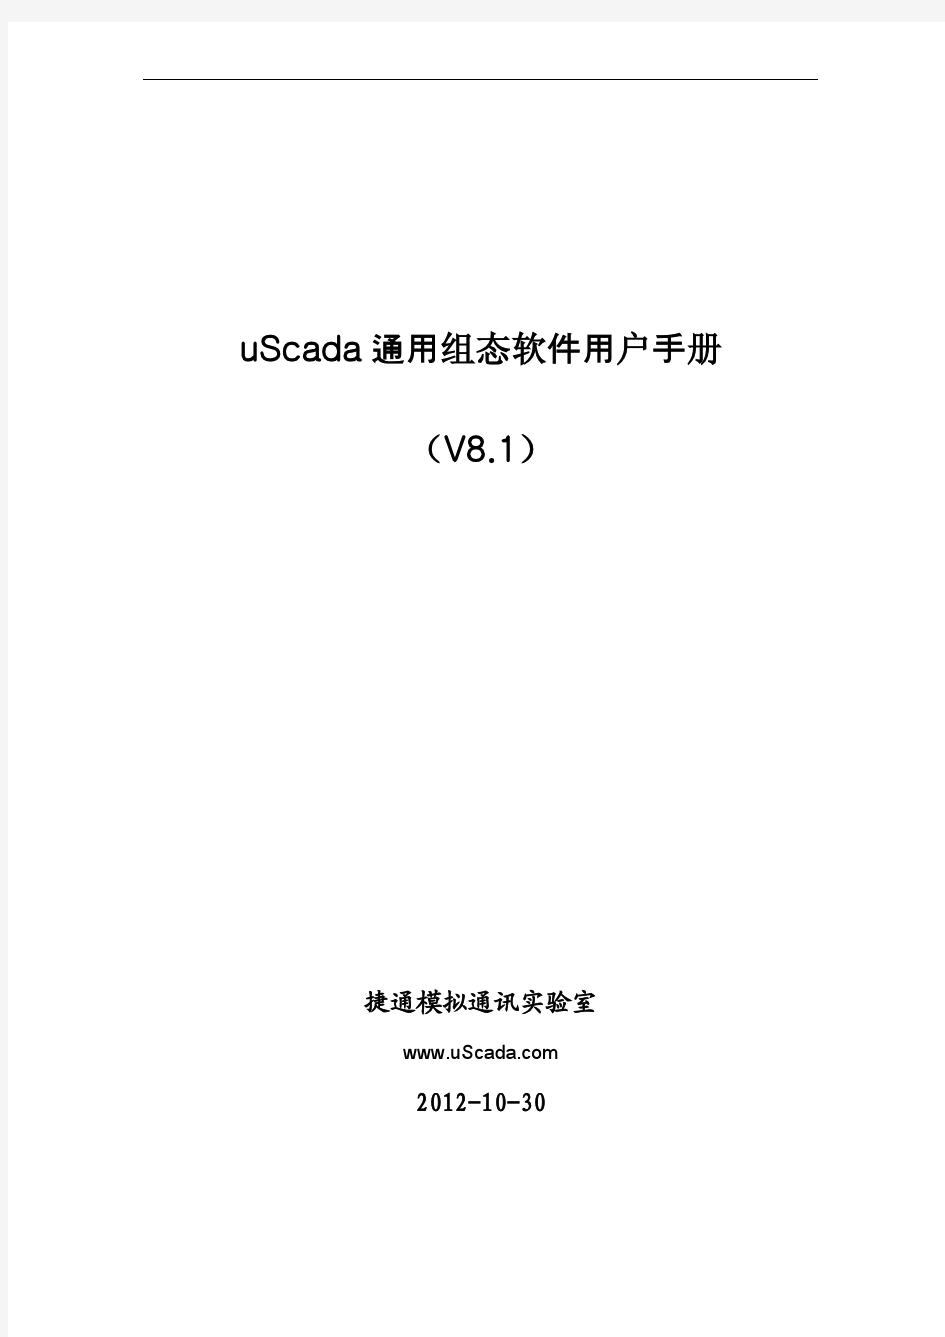 uScada企业版用户手册(V8.1)